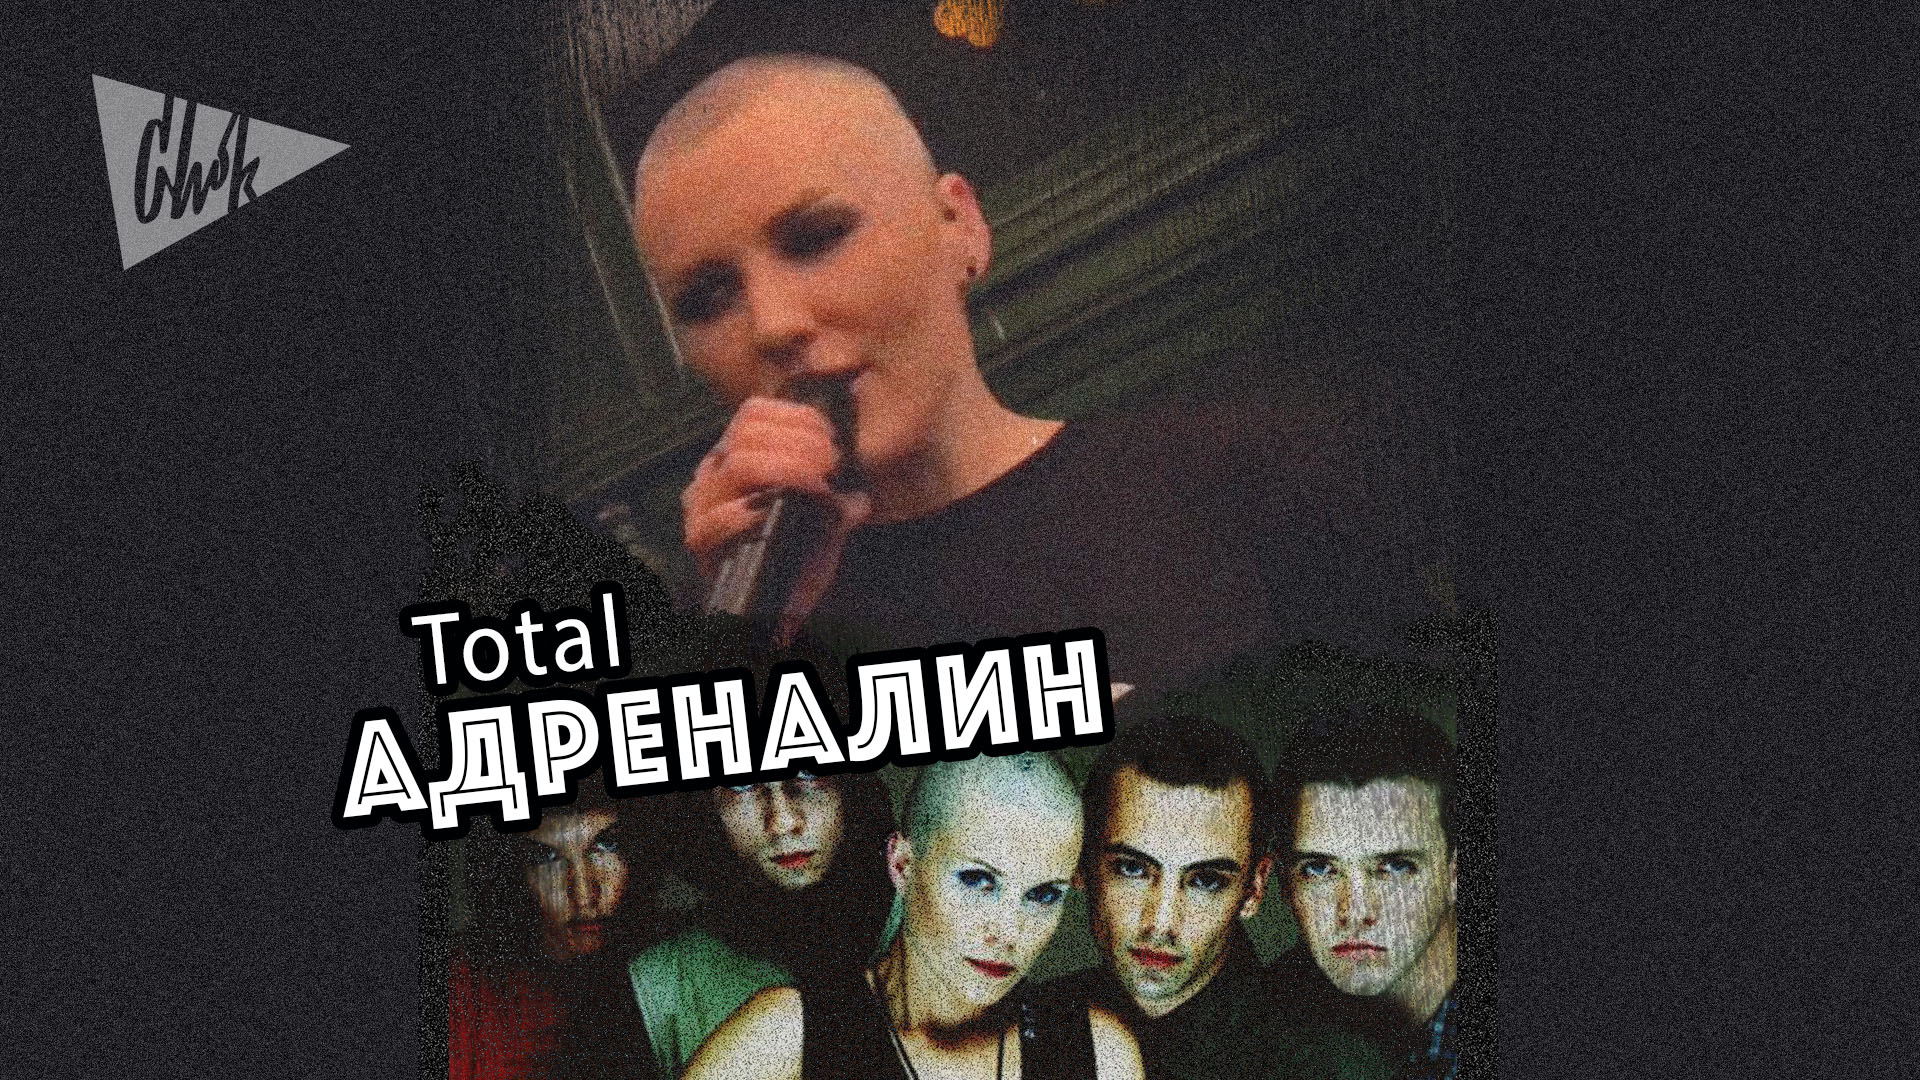 Total - Адреналин (Chok live cover)